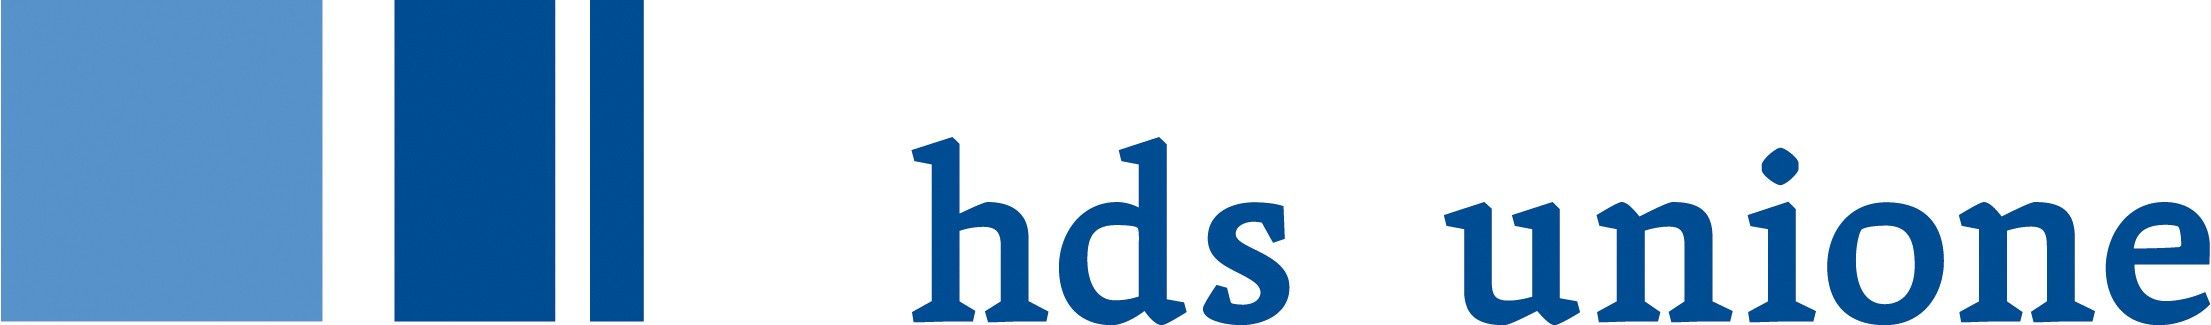 HDS_unione_Logo.jpg